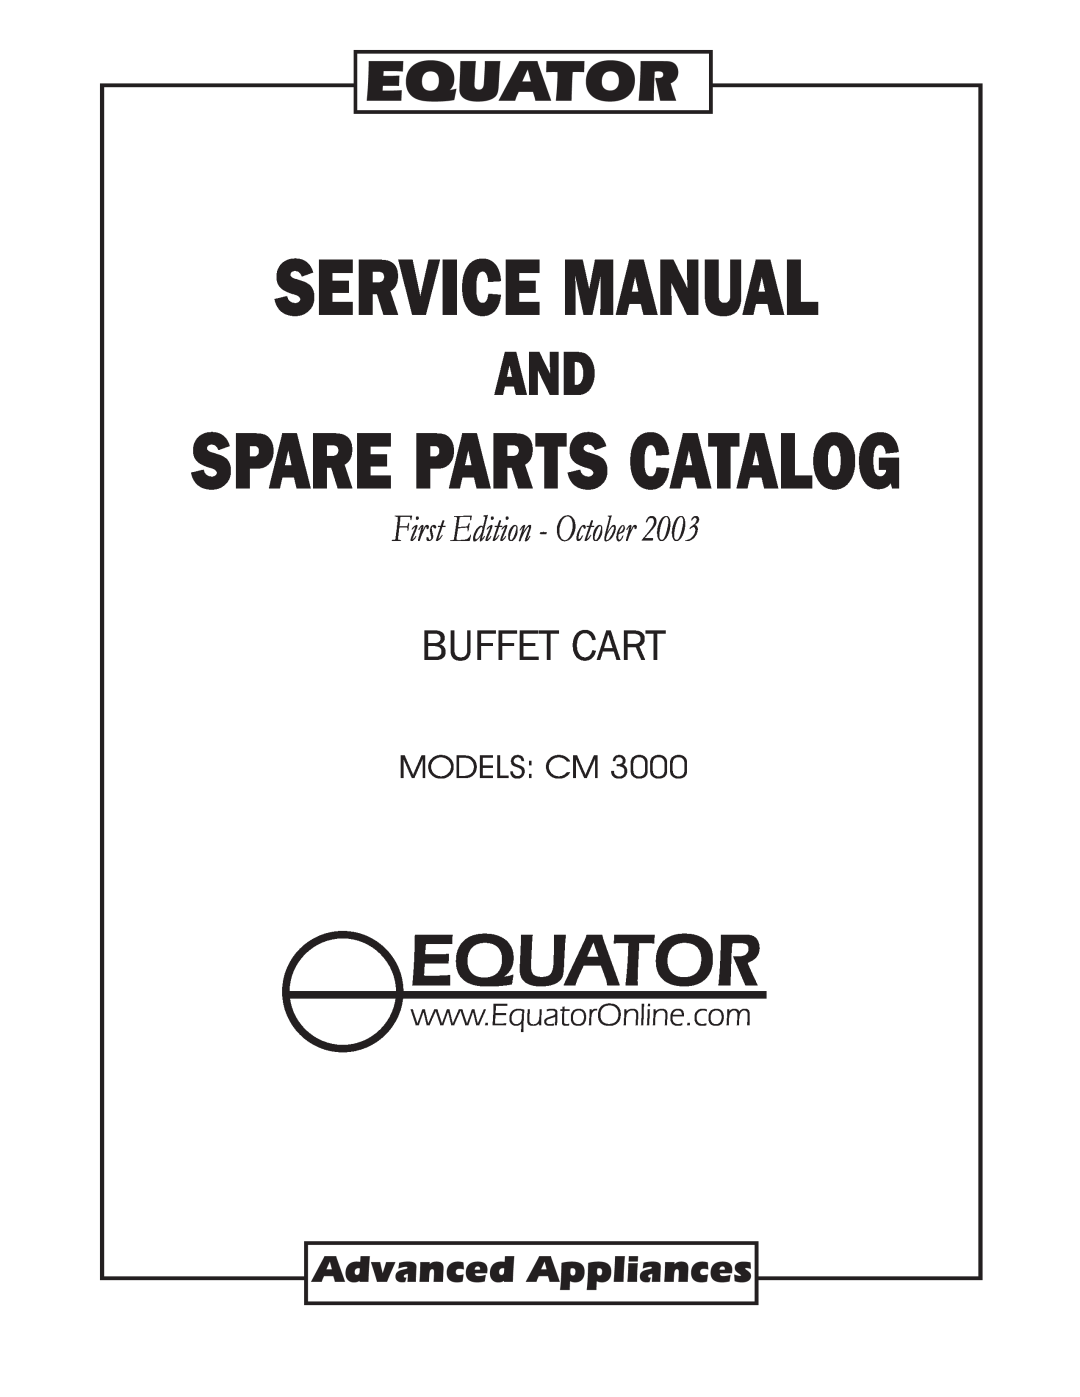 Equator CM 3000 service manual Spare Parts Catalog, Equator, Buffet Cart, First Edition - October, Advanced Appliances 